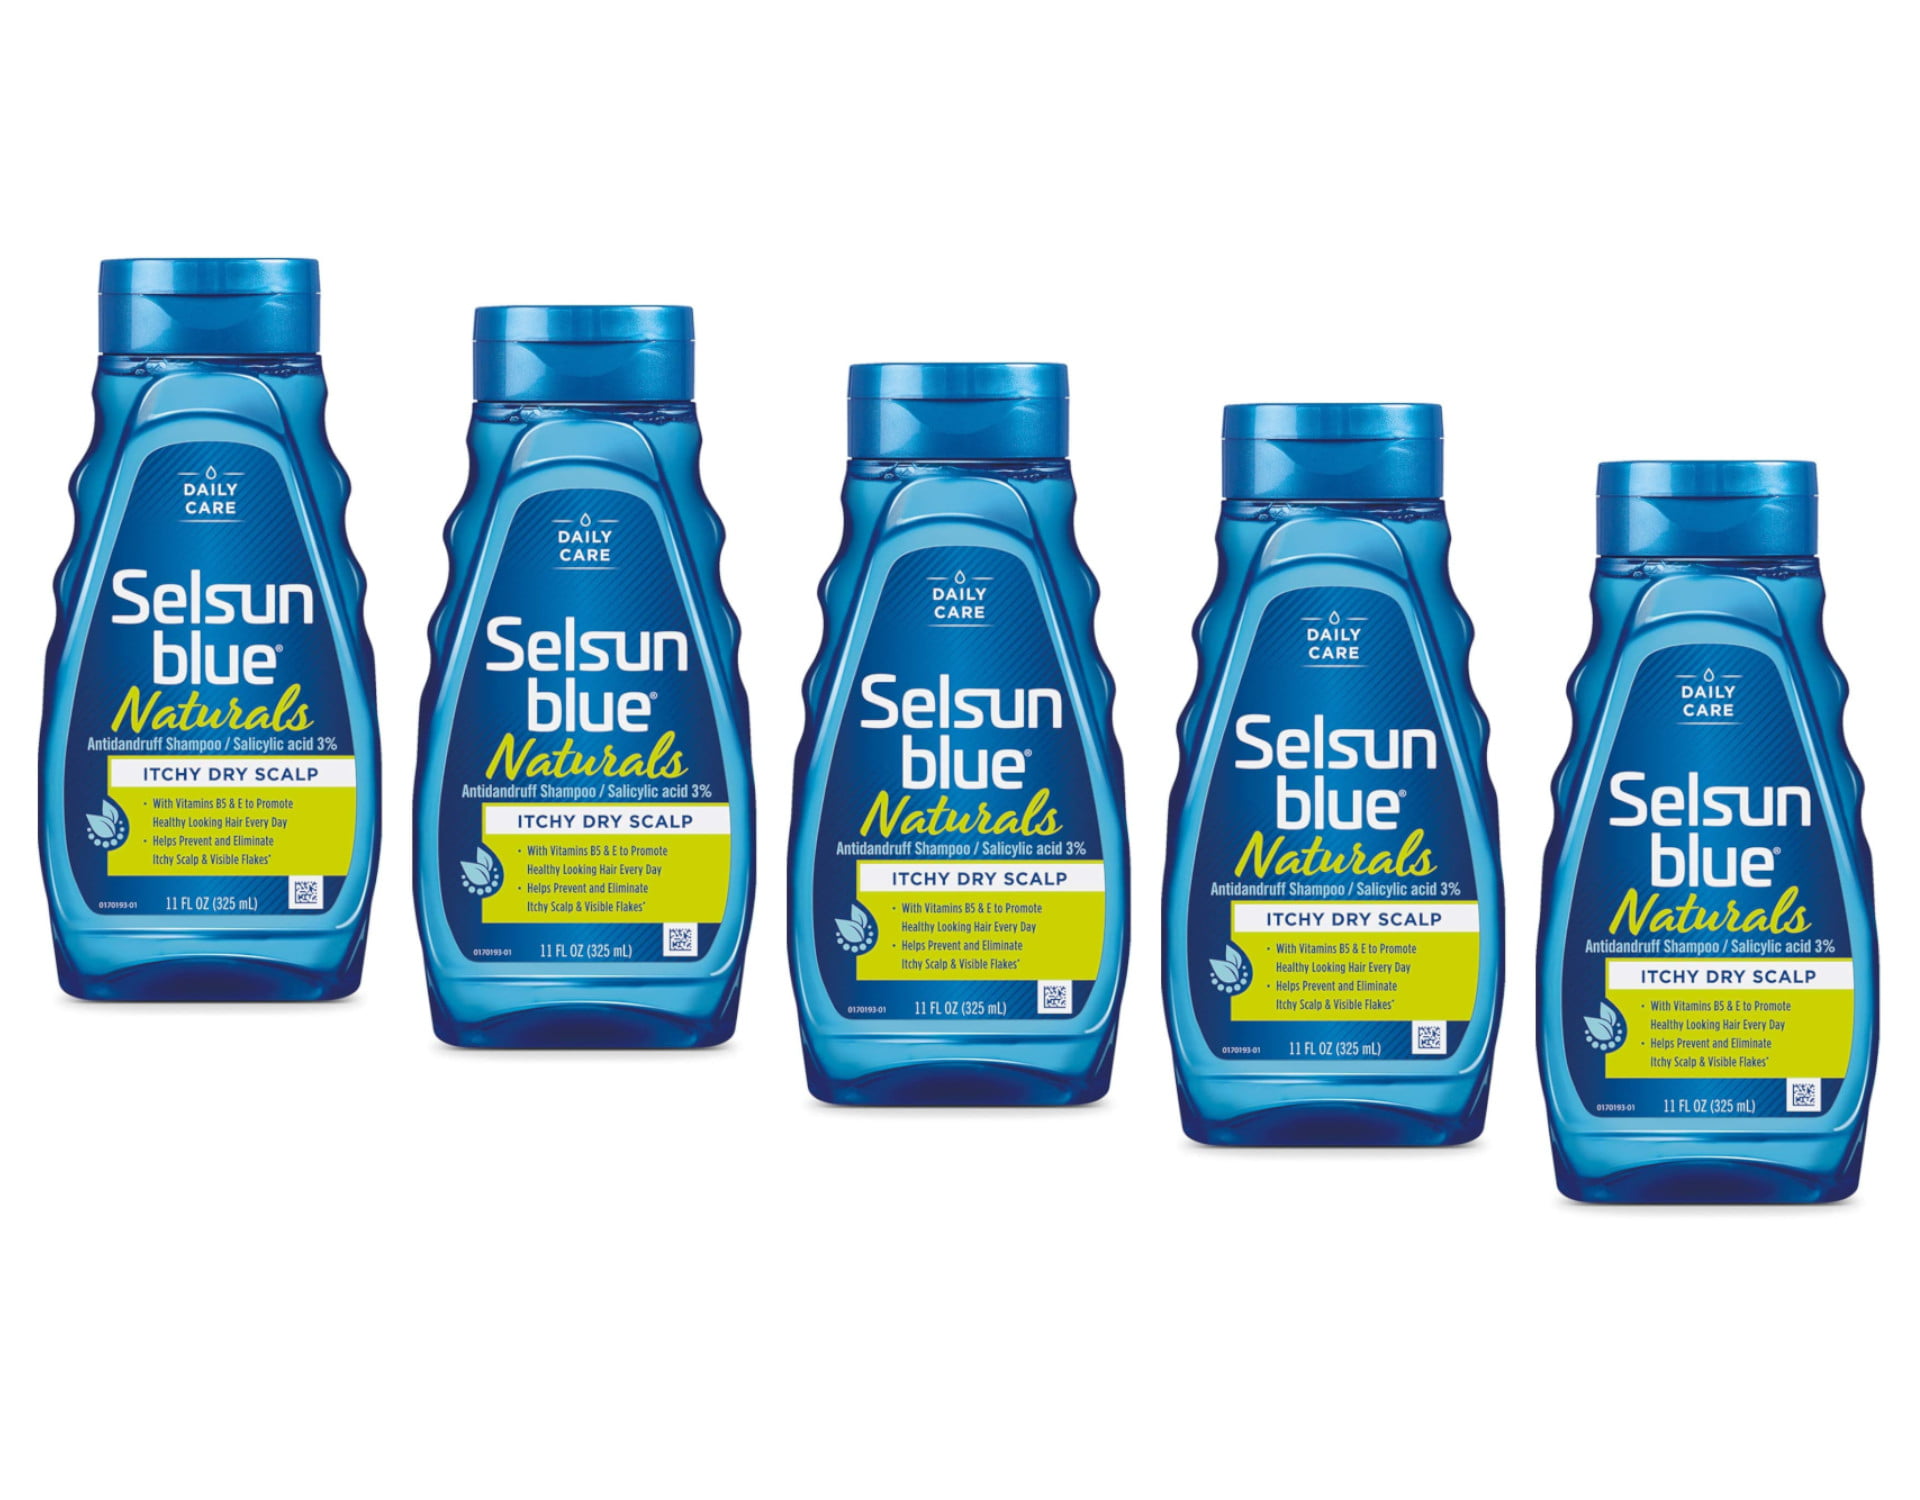 Selsun Blue Naturals Dandruff Shampoo - wide 5